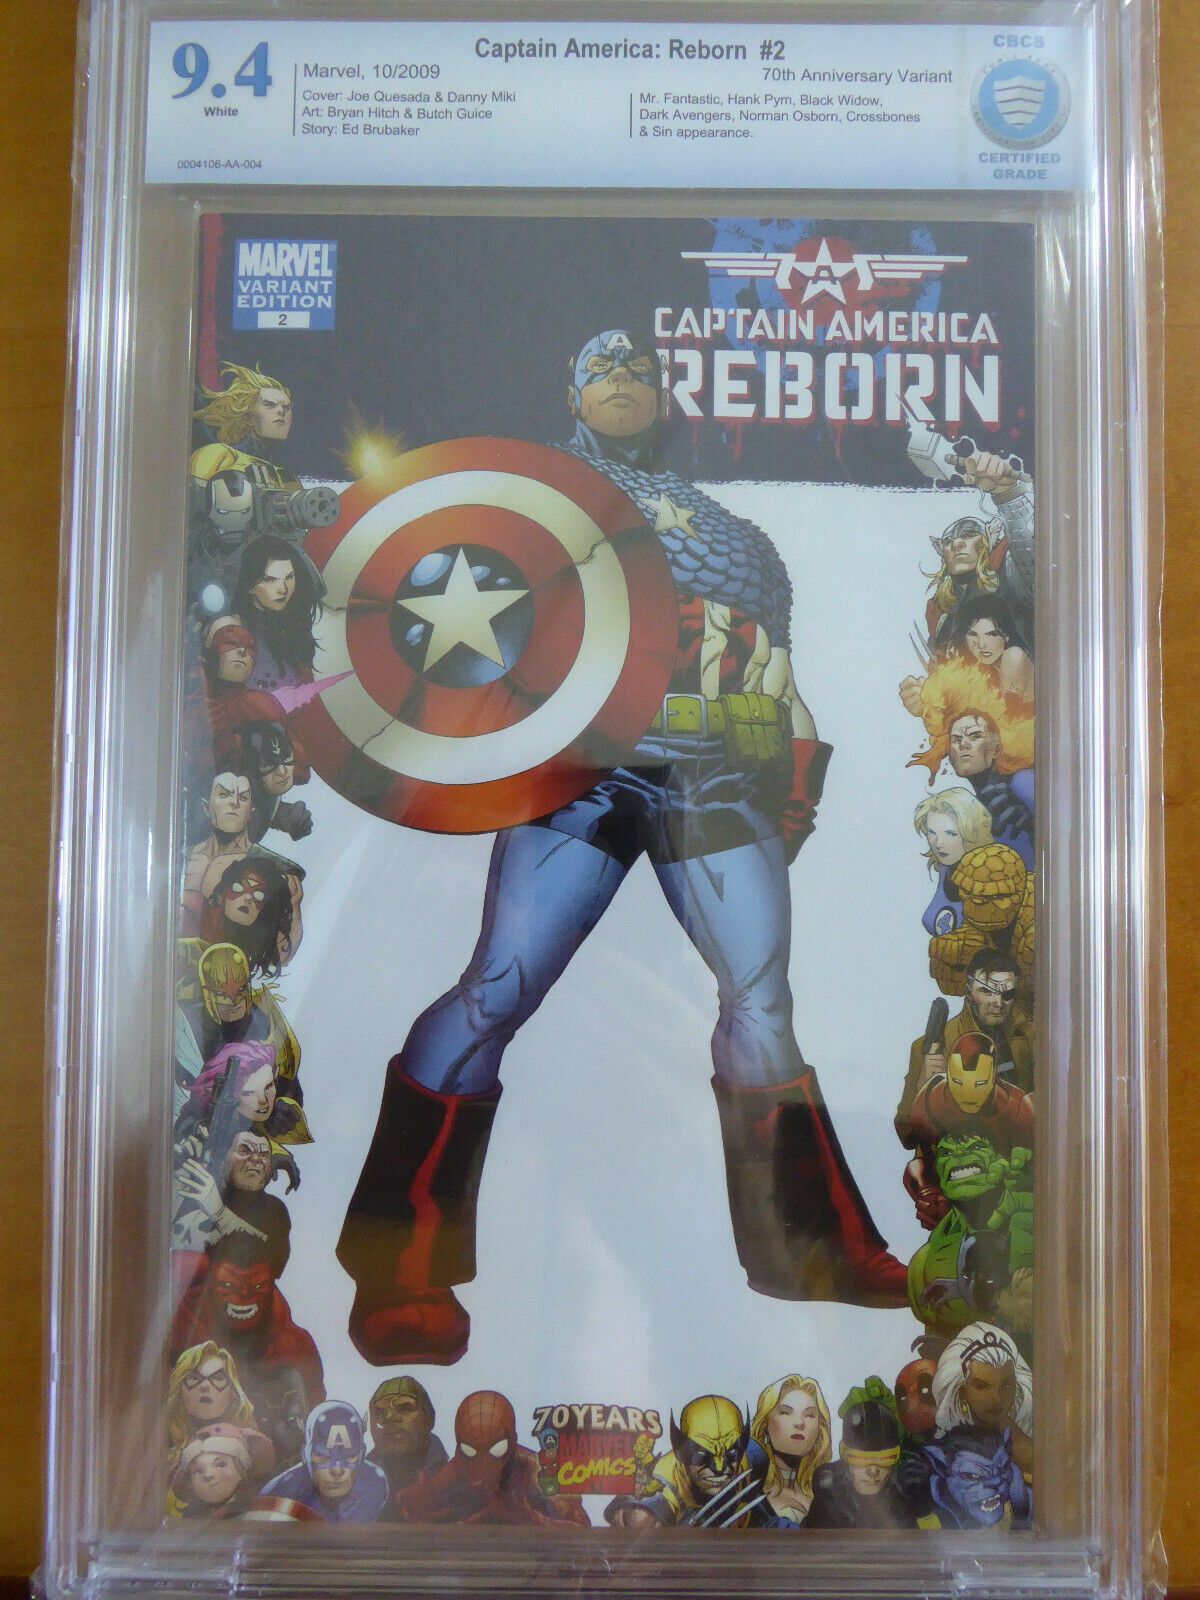 Captain America: Reborn #2, 70th Anniversary variant, 2009, Marvel, CBCS 9.4